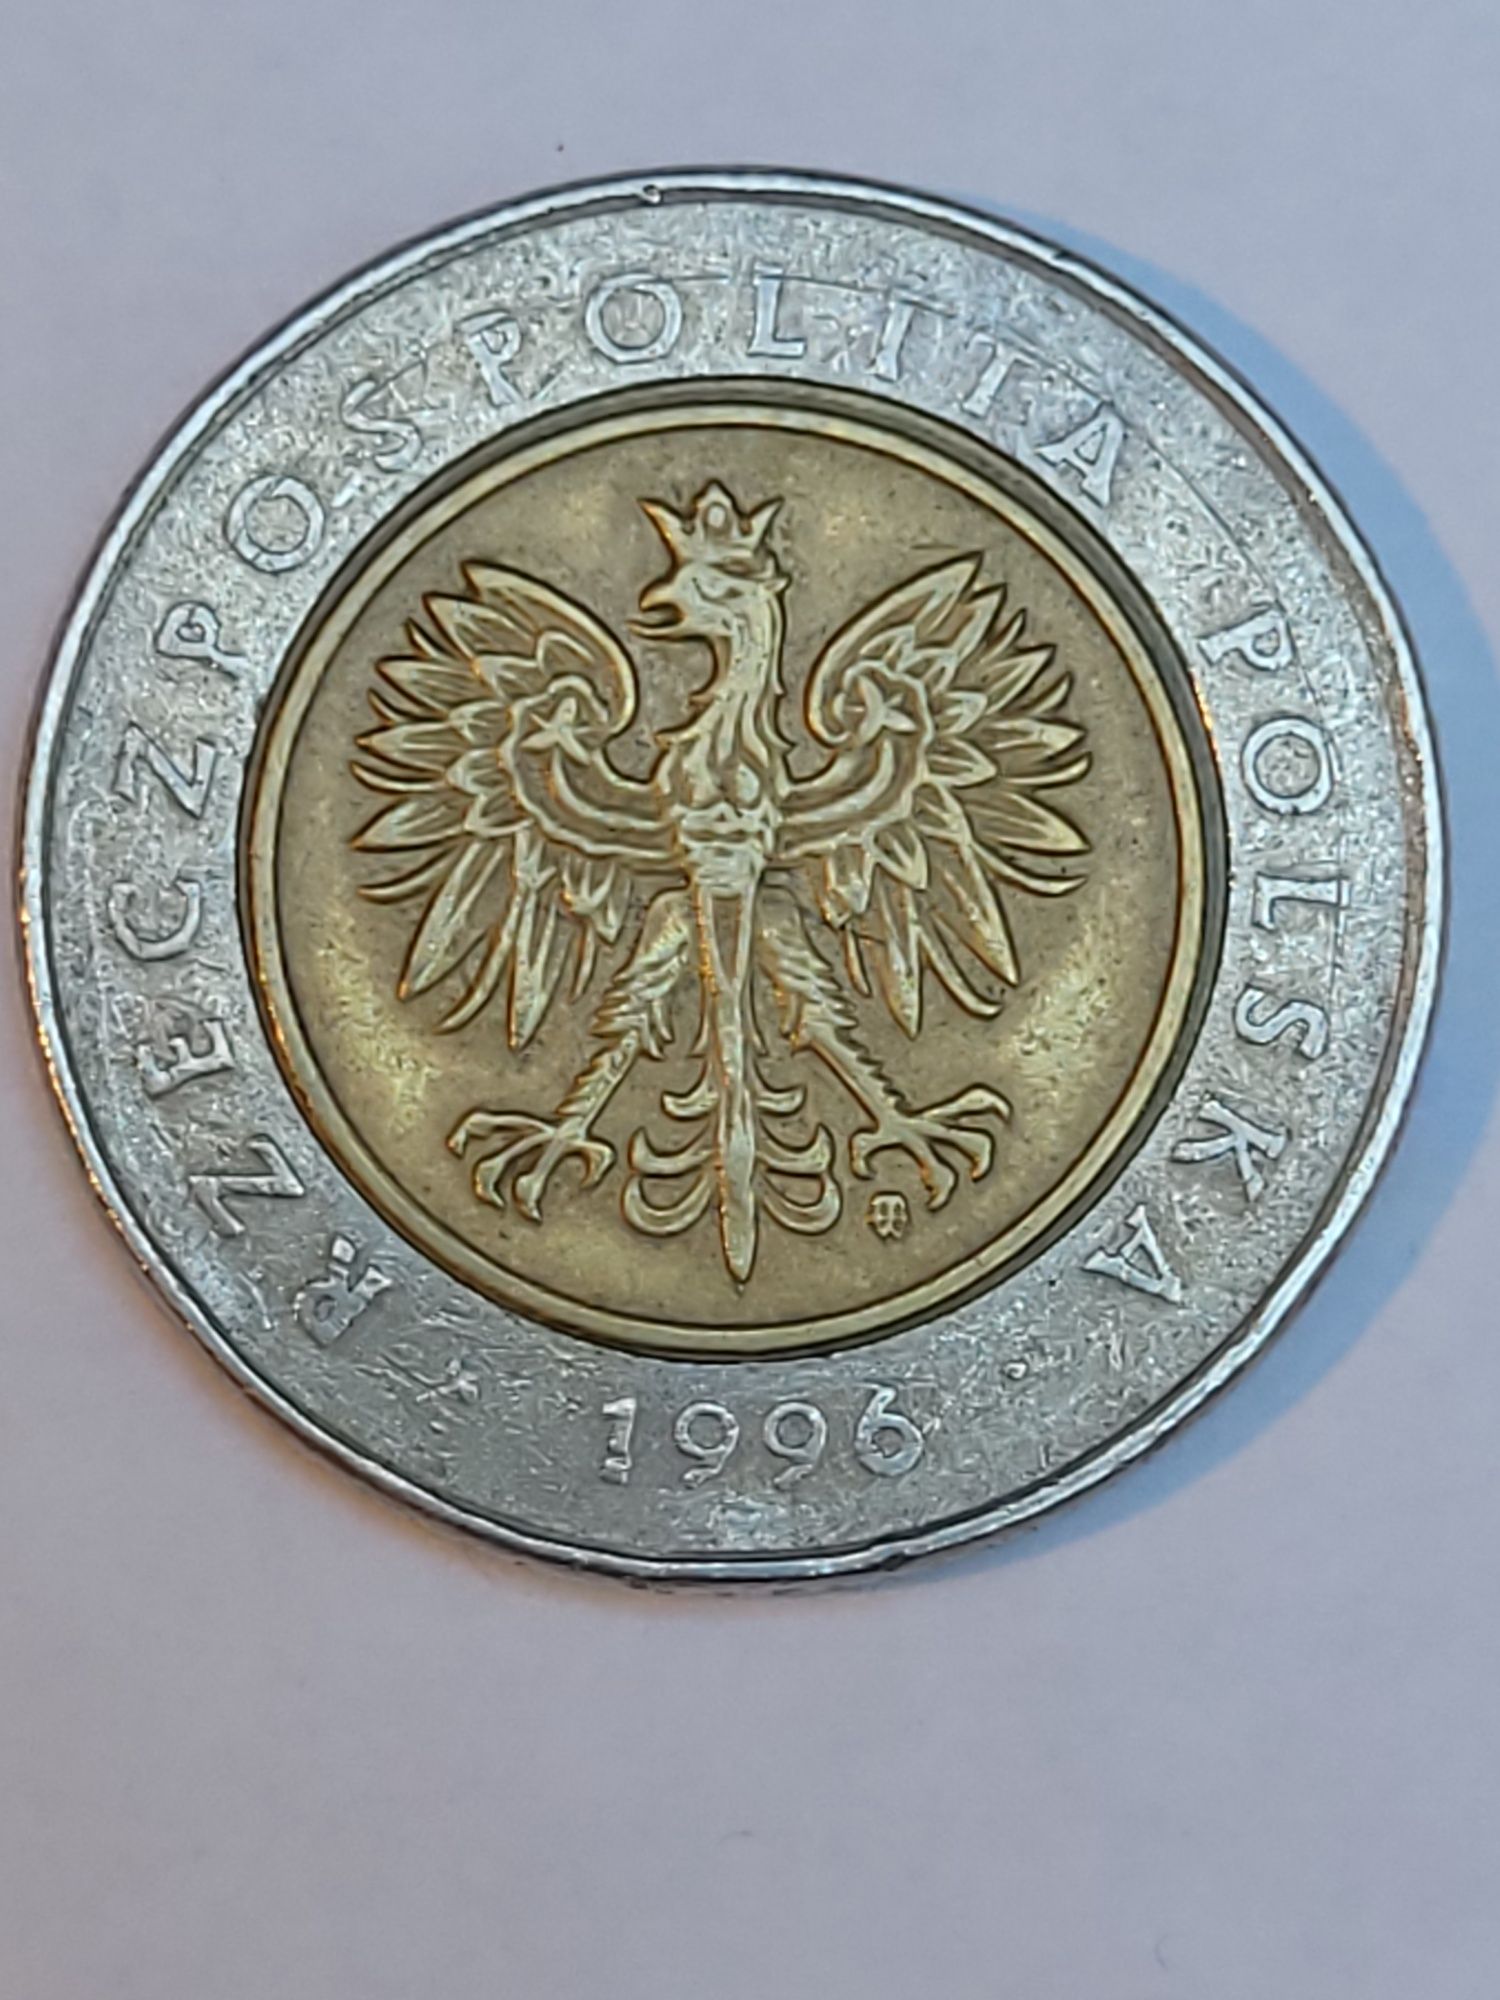 Destrukt Moneta 5 zł 1996 rok